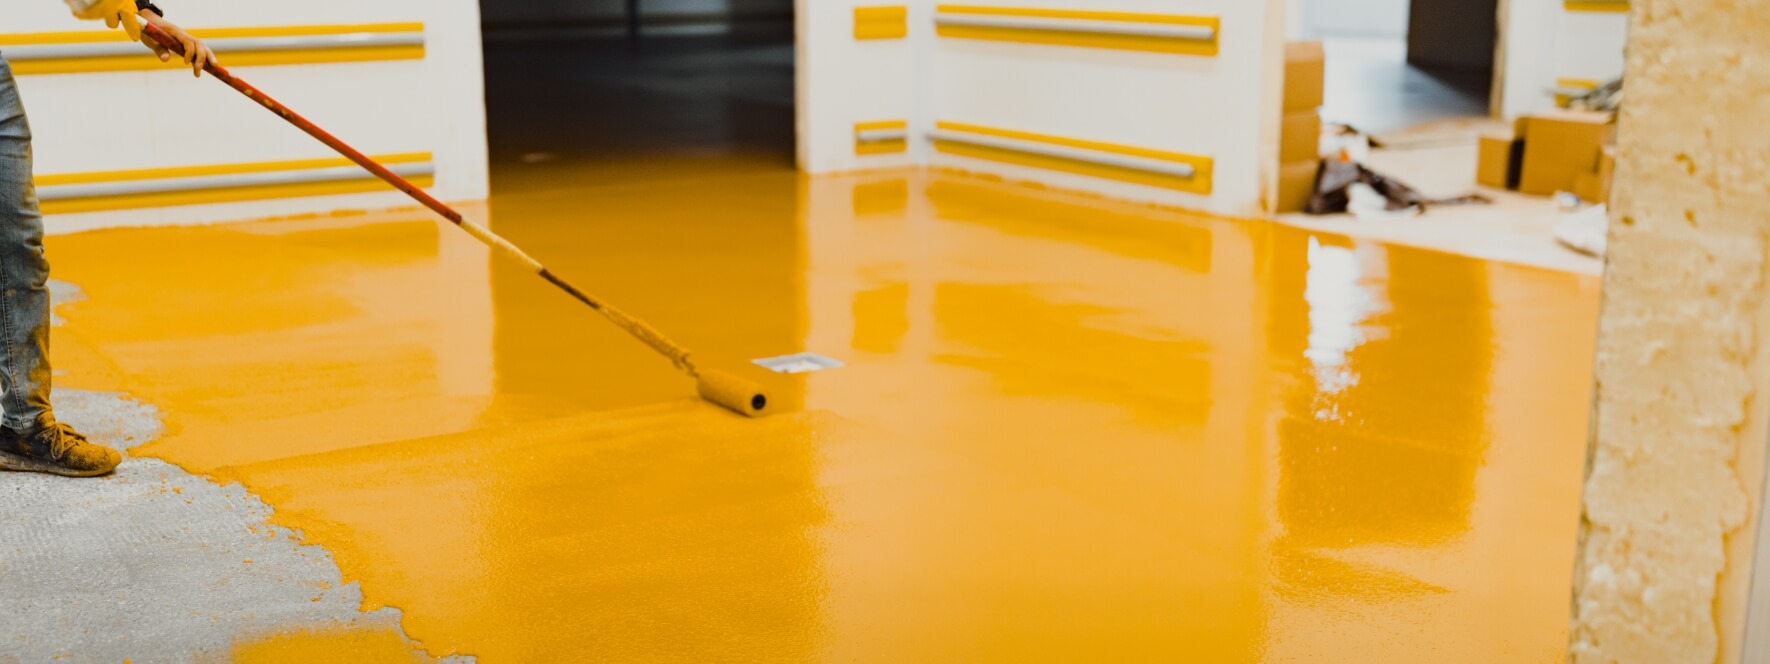 long-paint-roller-flooring-yellow